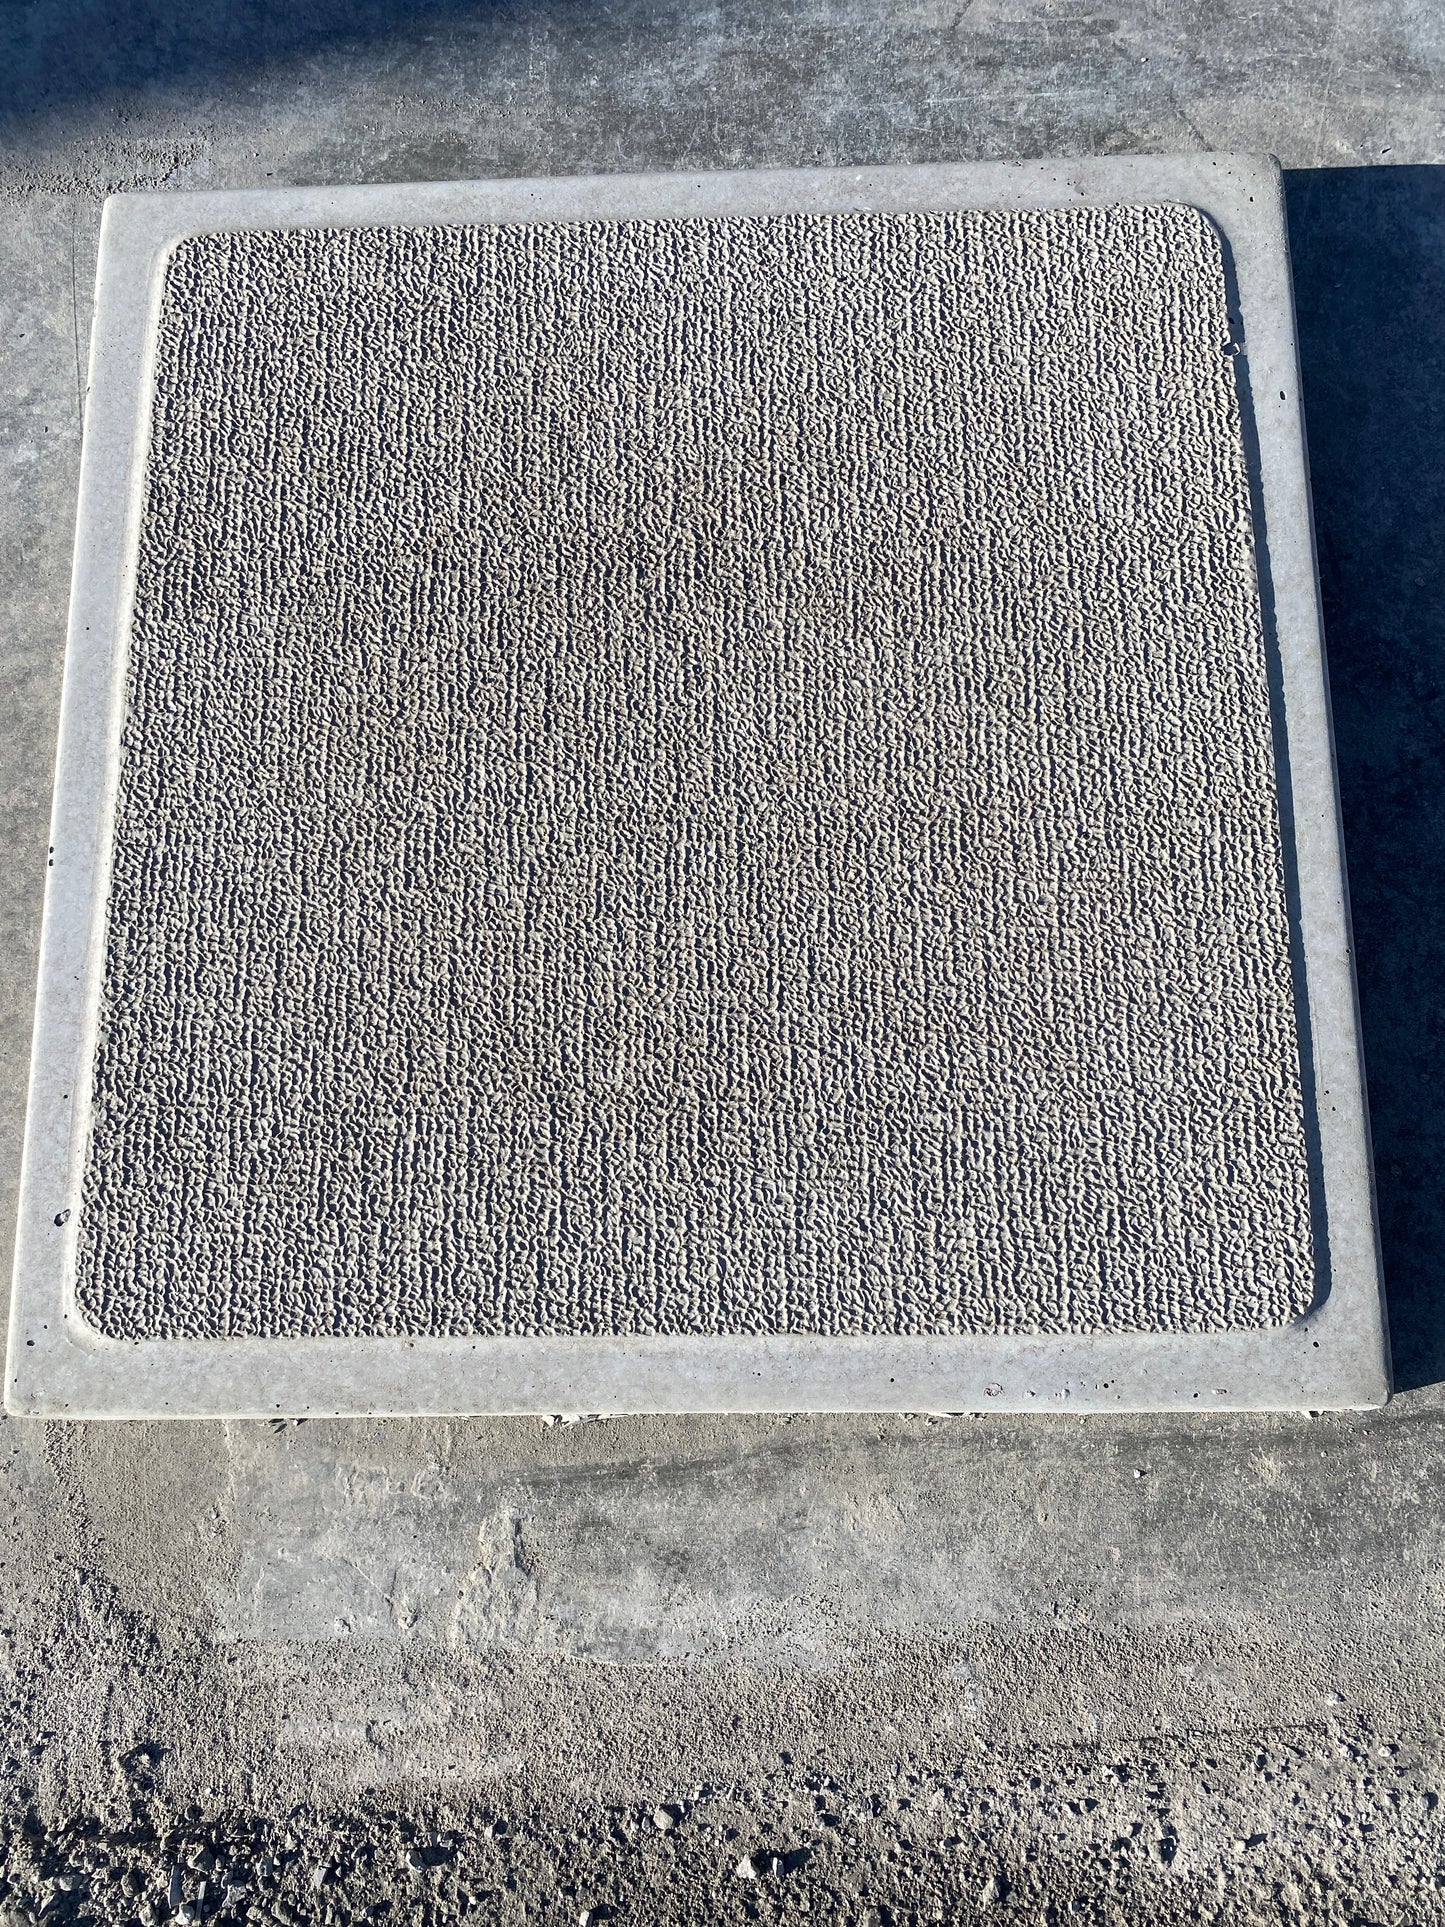 450 x 450 Textured Concrete Pavers